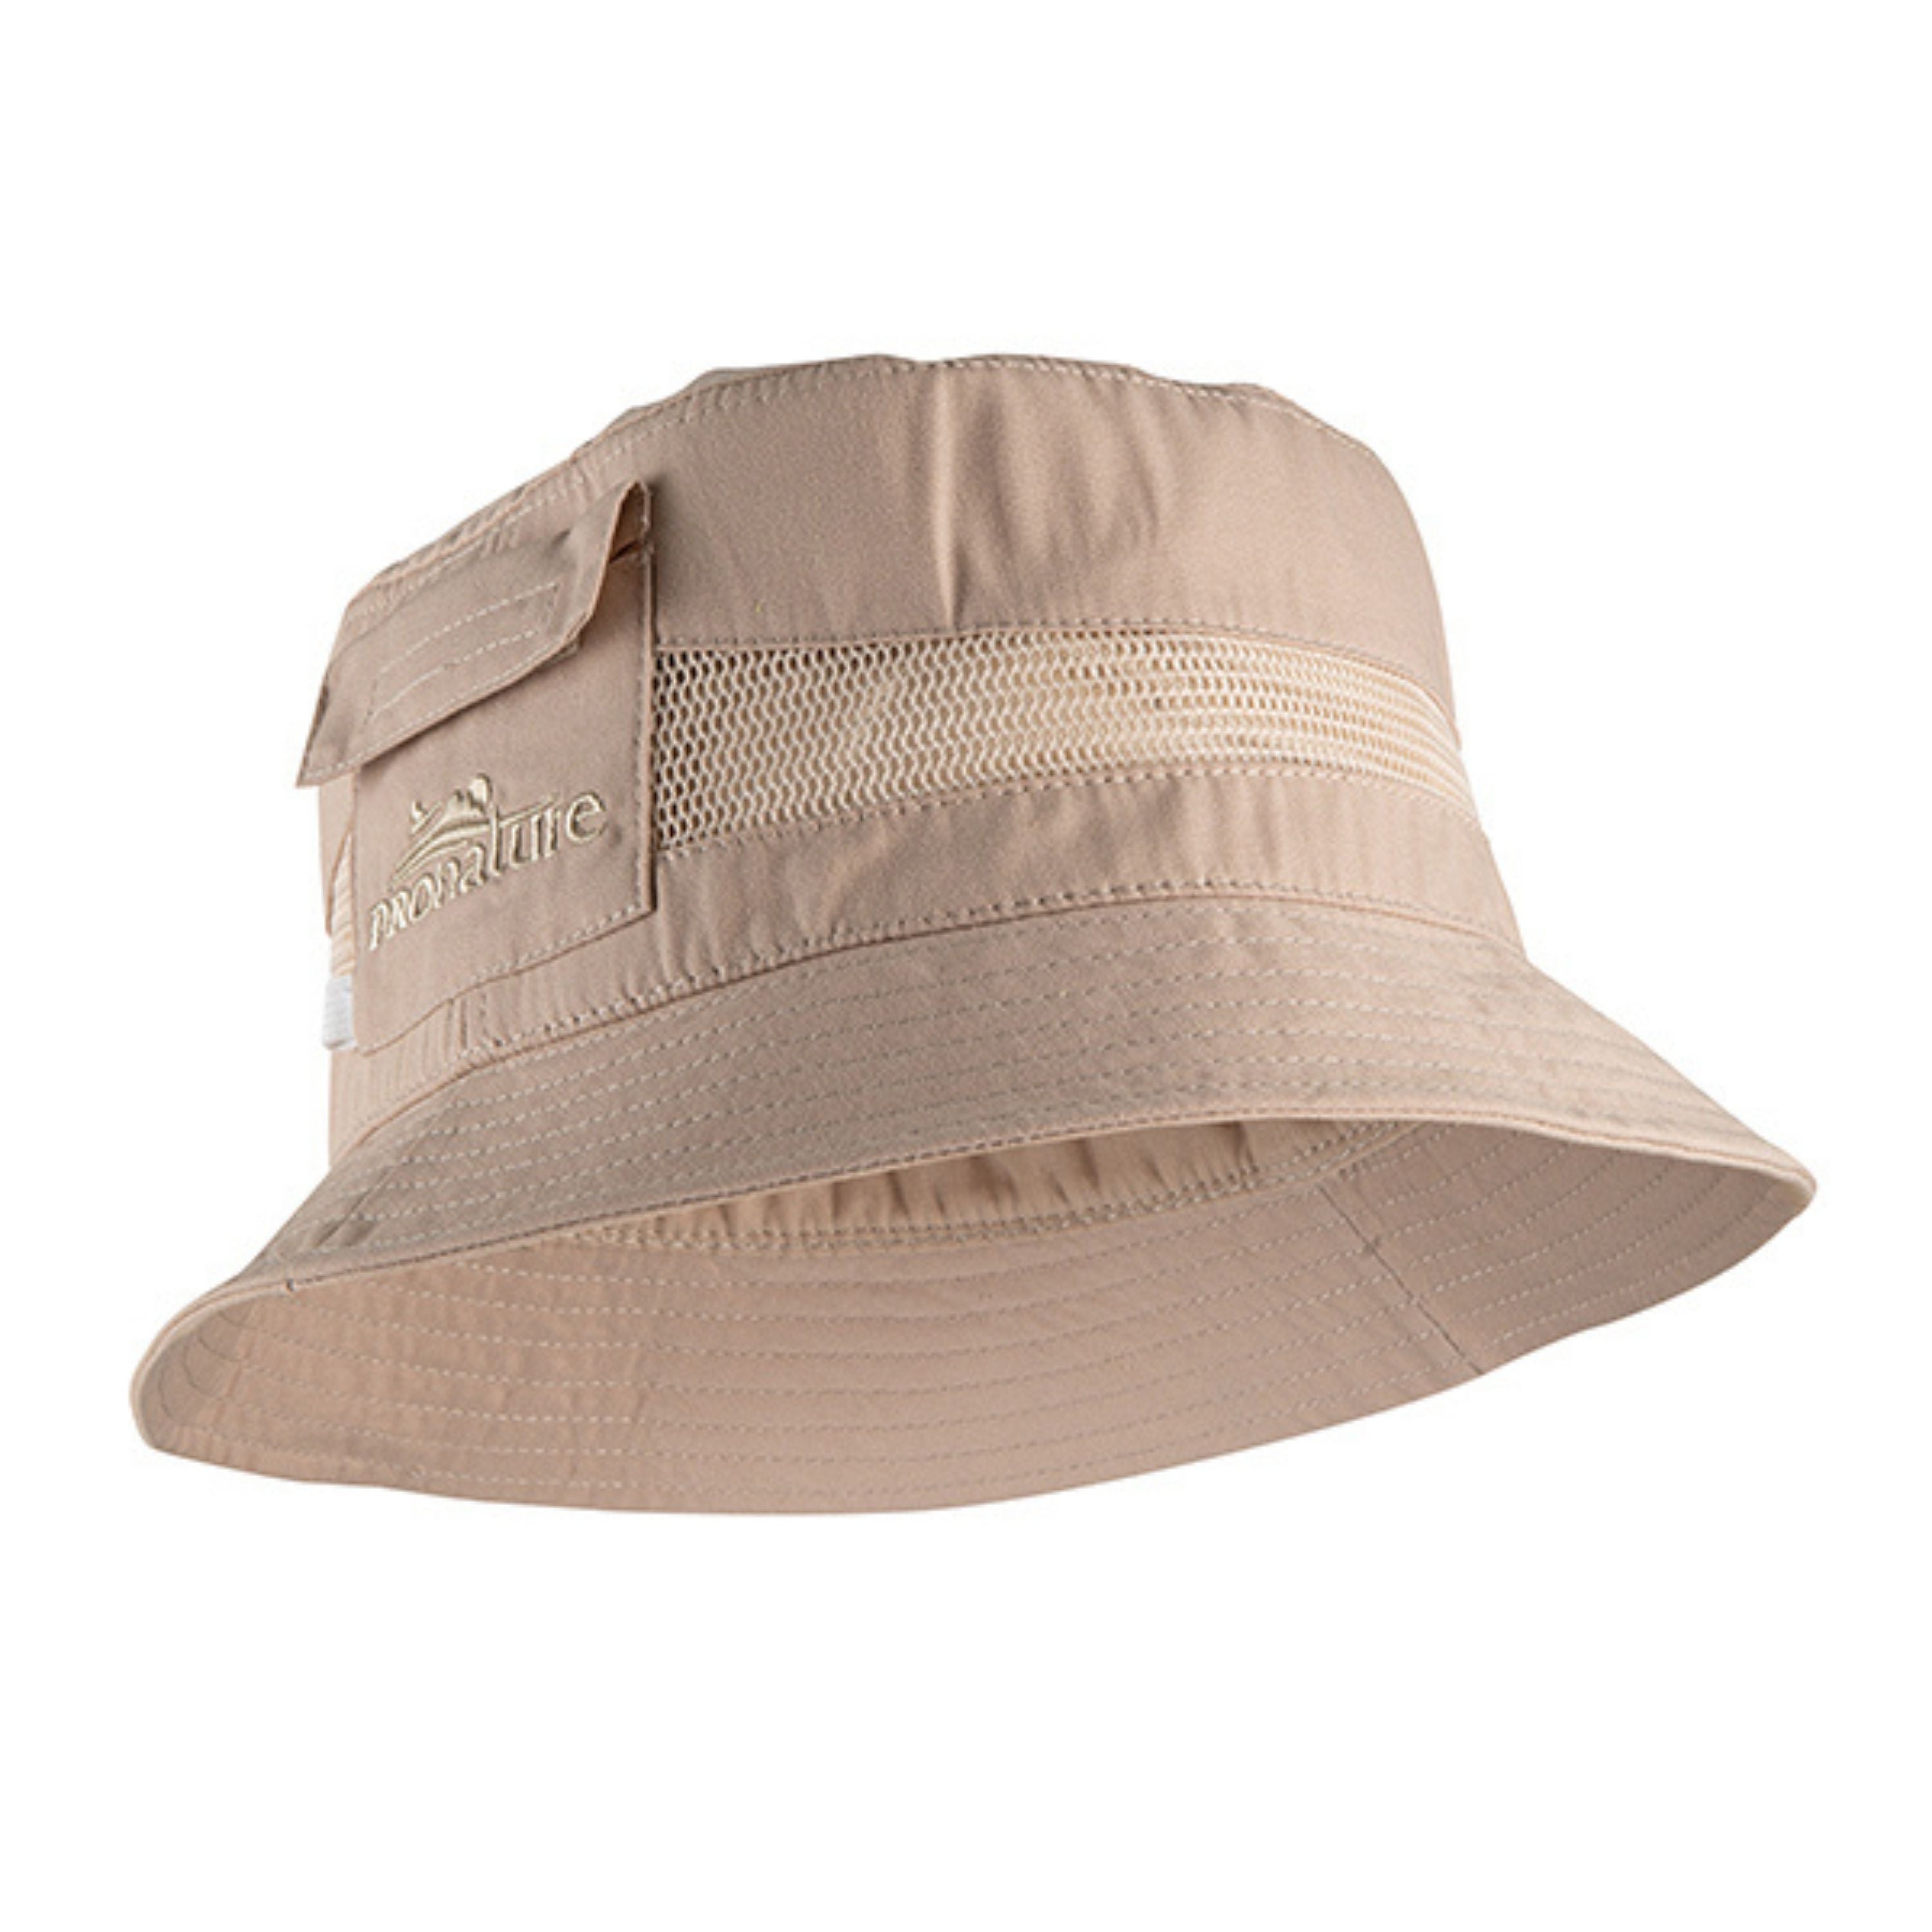 "Bucket" Fisher's hat - Unisex